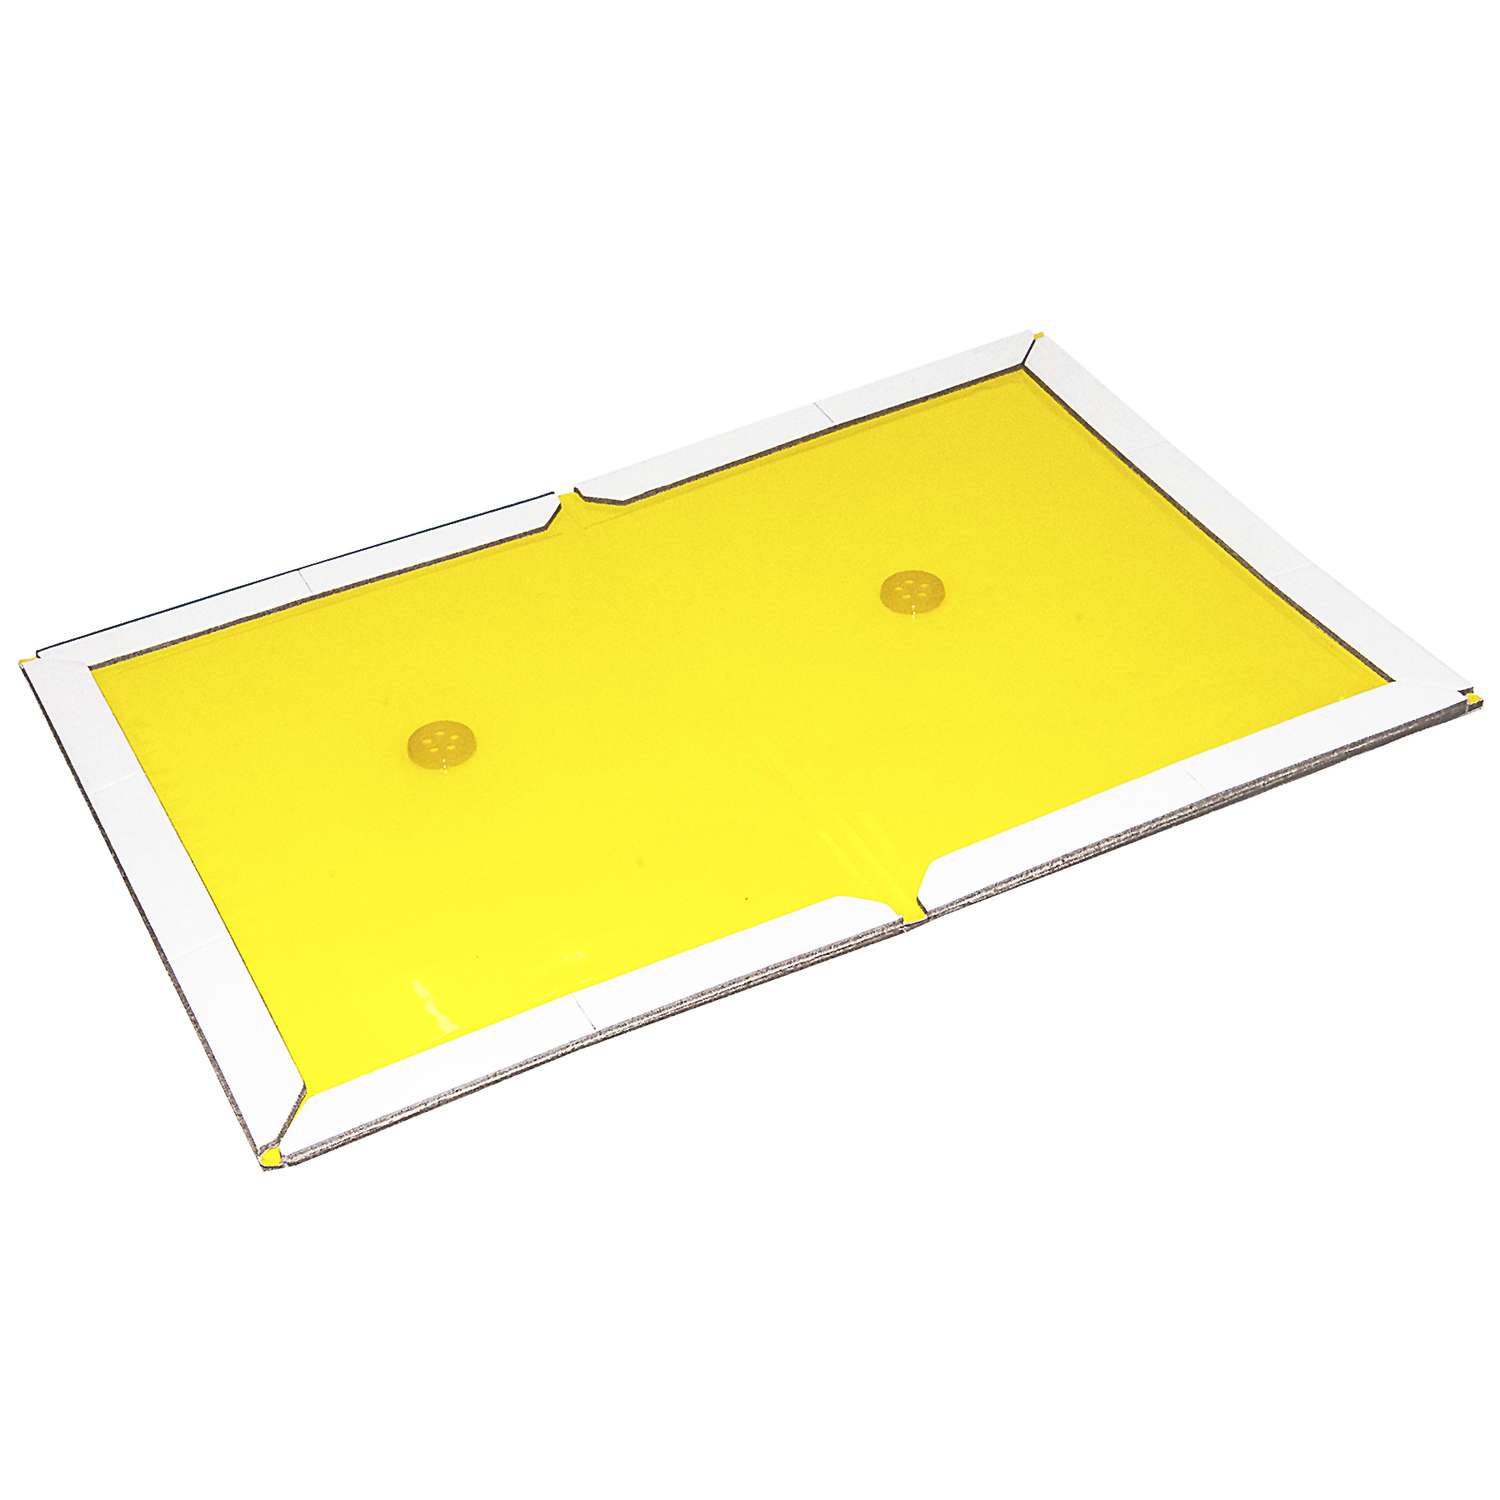 Max Catch Glue Board Traps - Unscented 36 Count